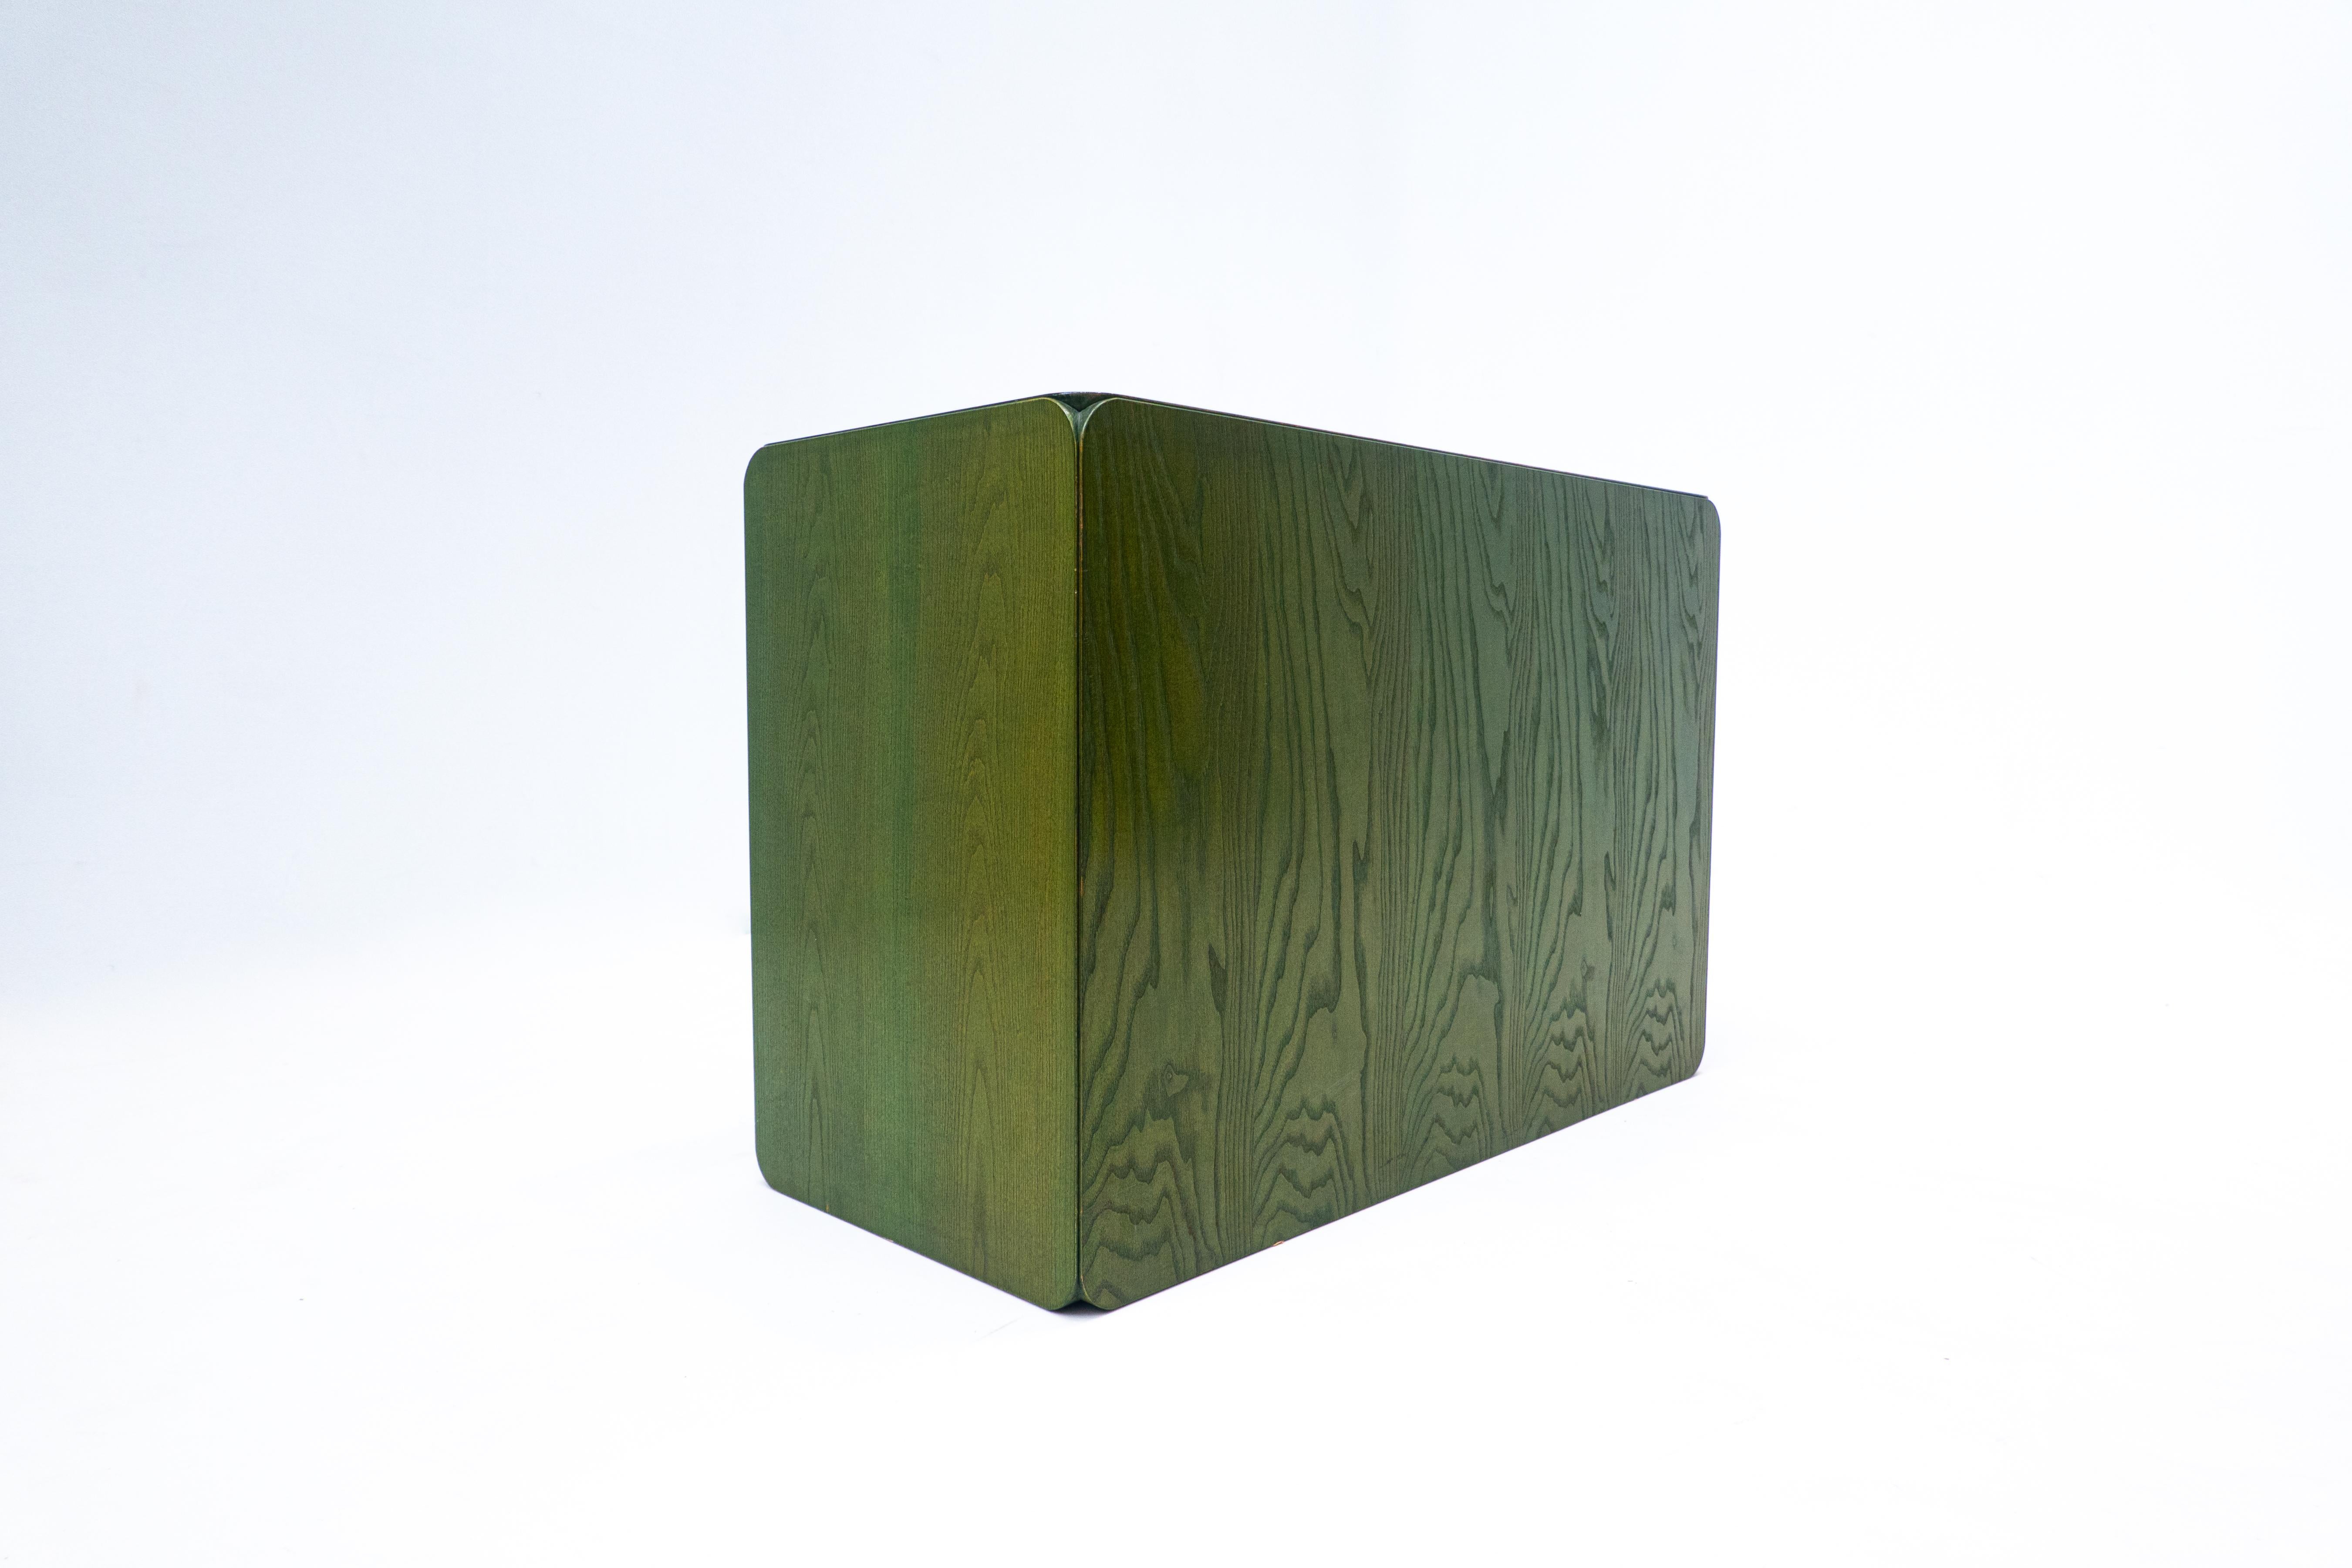 Mid-century green wooden chest by Derk Jan de Vries - The Netherlands 1960s.